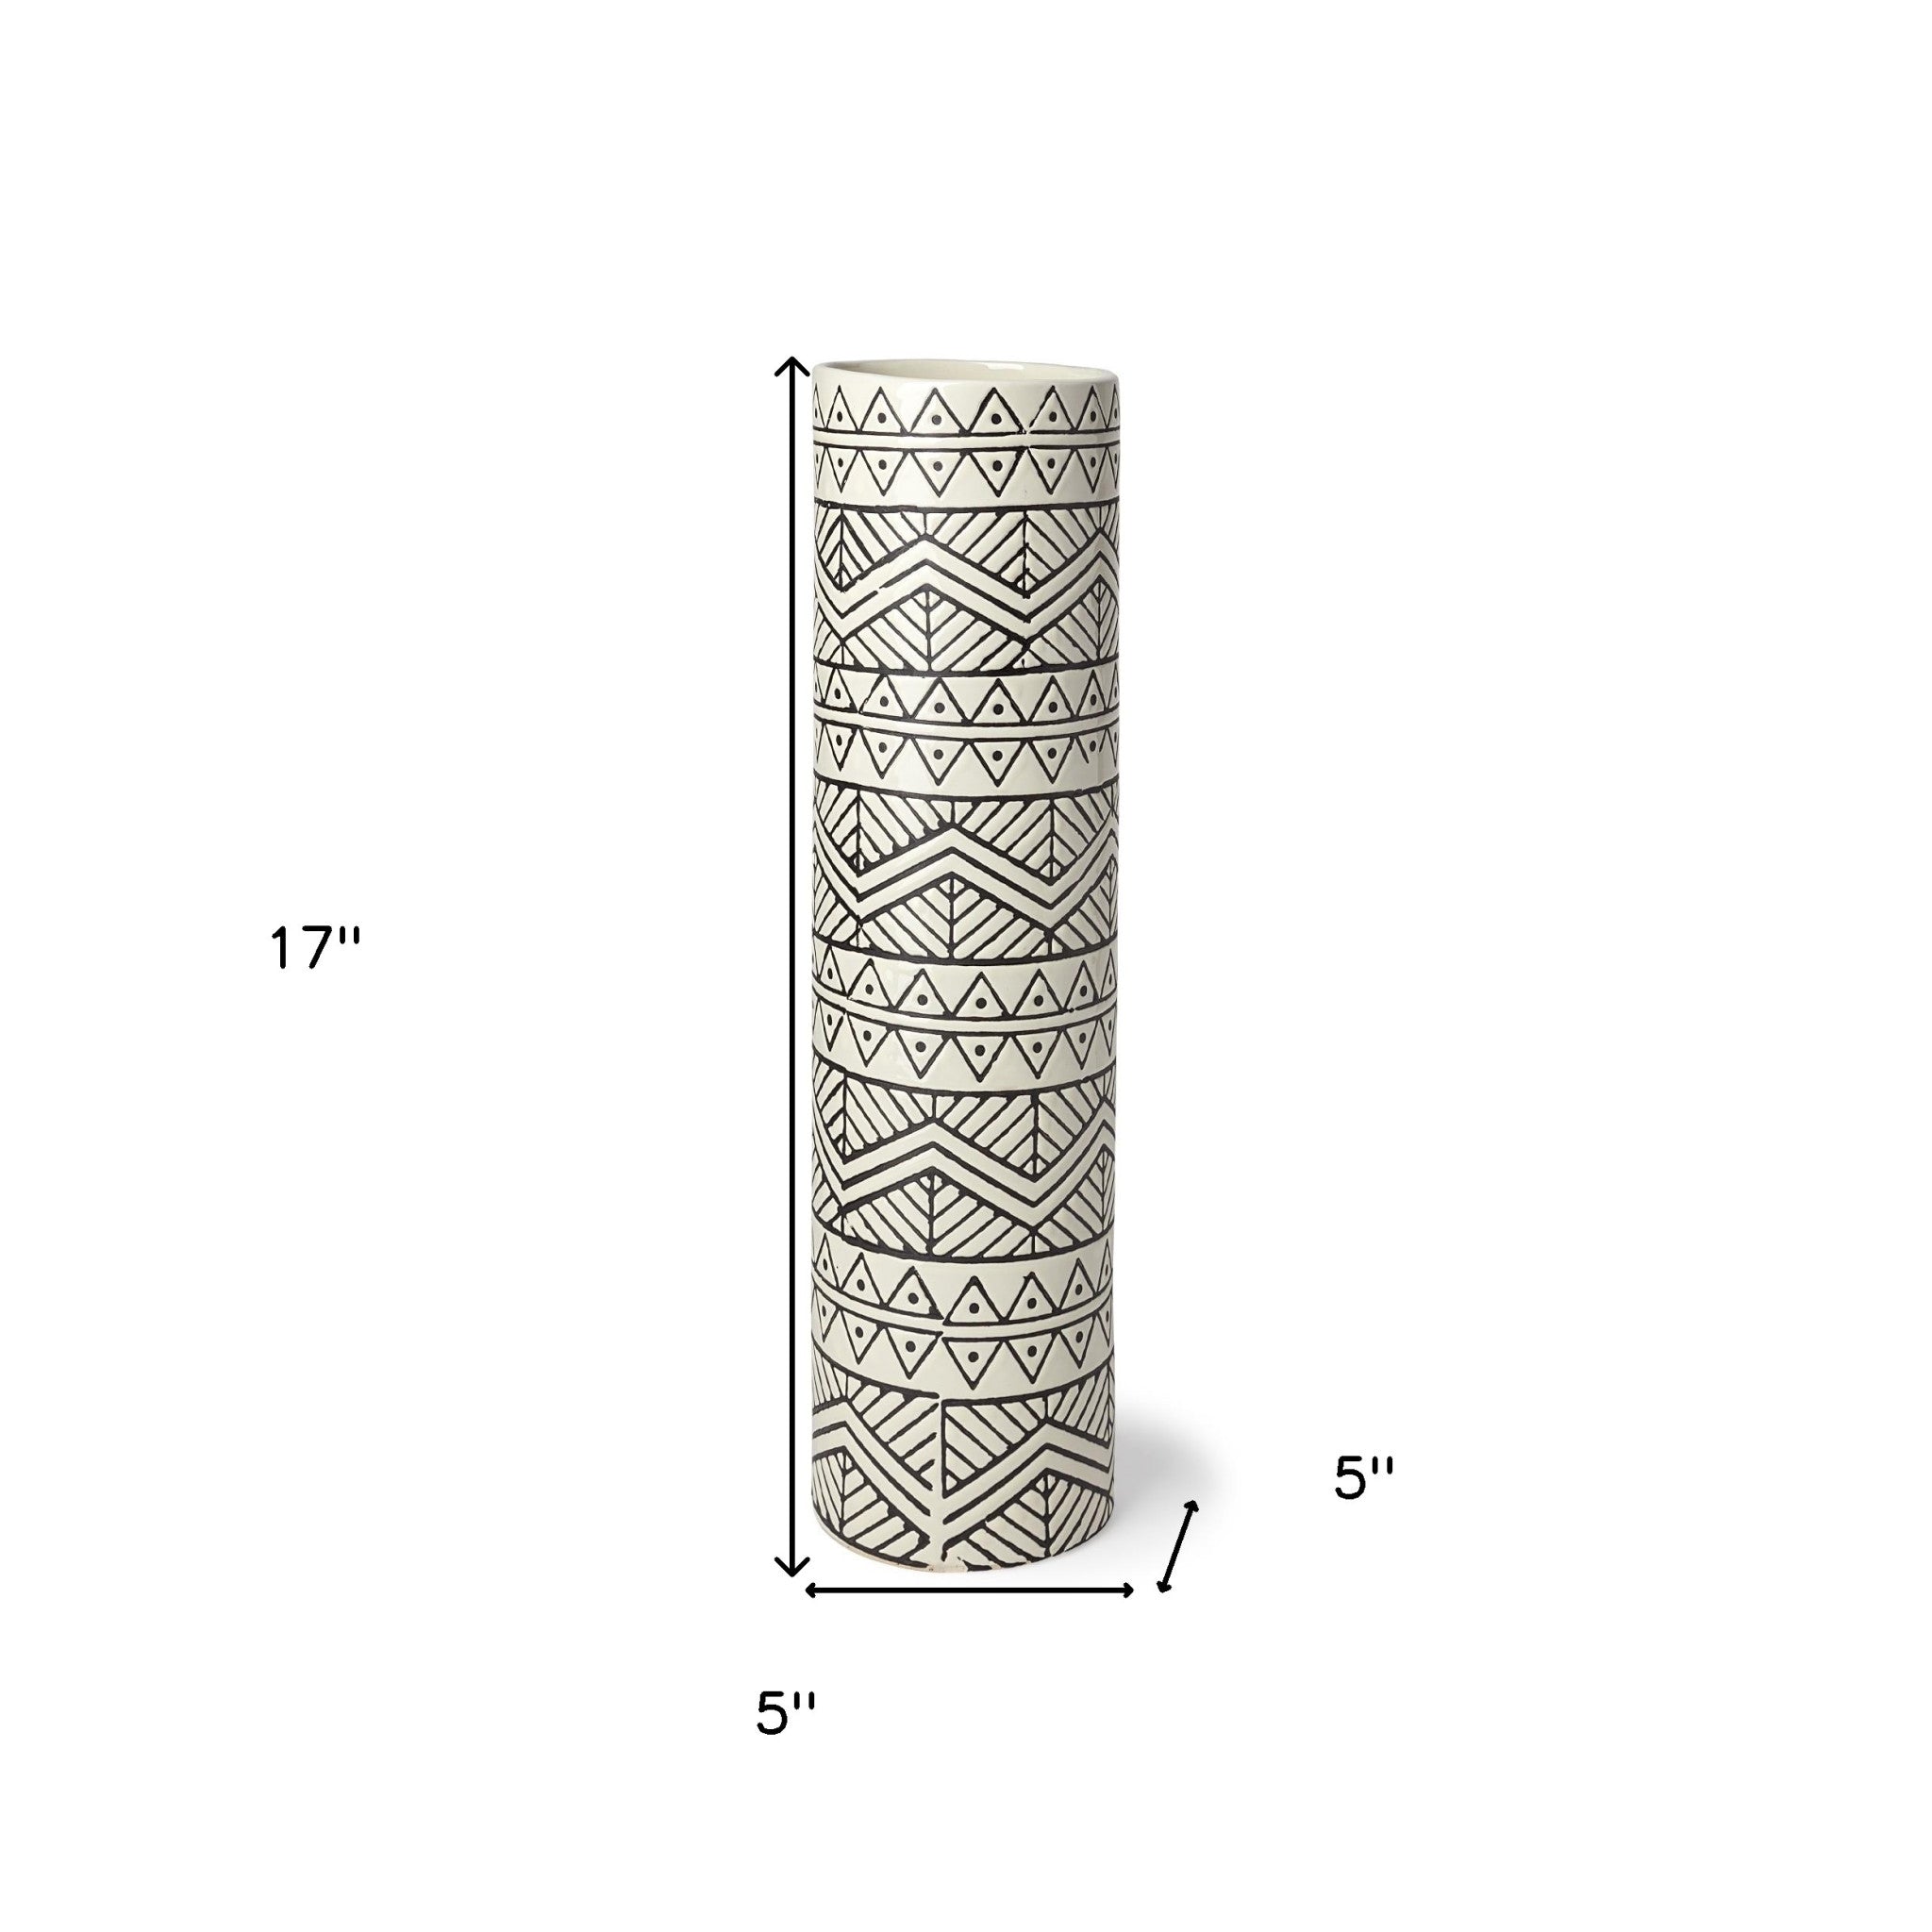 17" Ceramic Cream Geometric Cylinder Table Vase